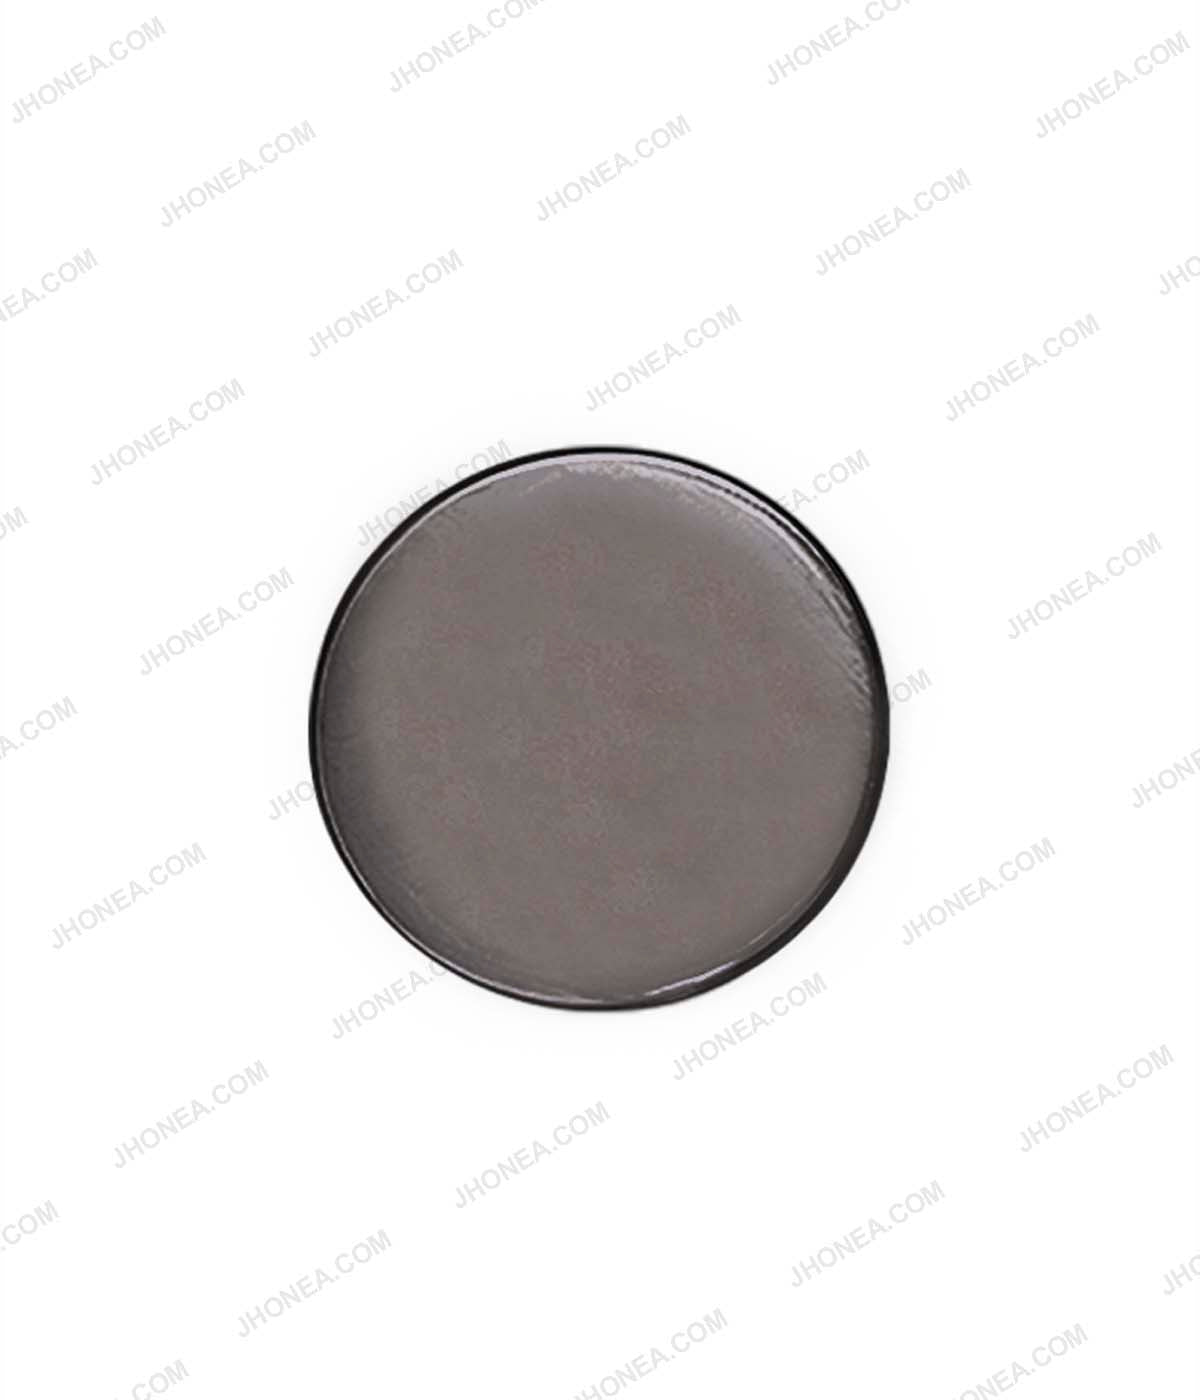 Plain Basic Flat surface Shirt/Coat Classic Shank Metal Buttons in Shiny Black Nickel (Gunmetal) Color